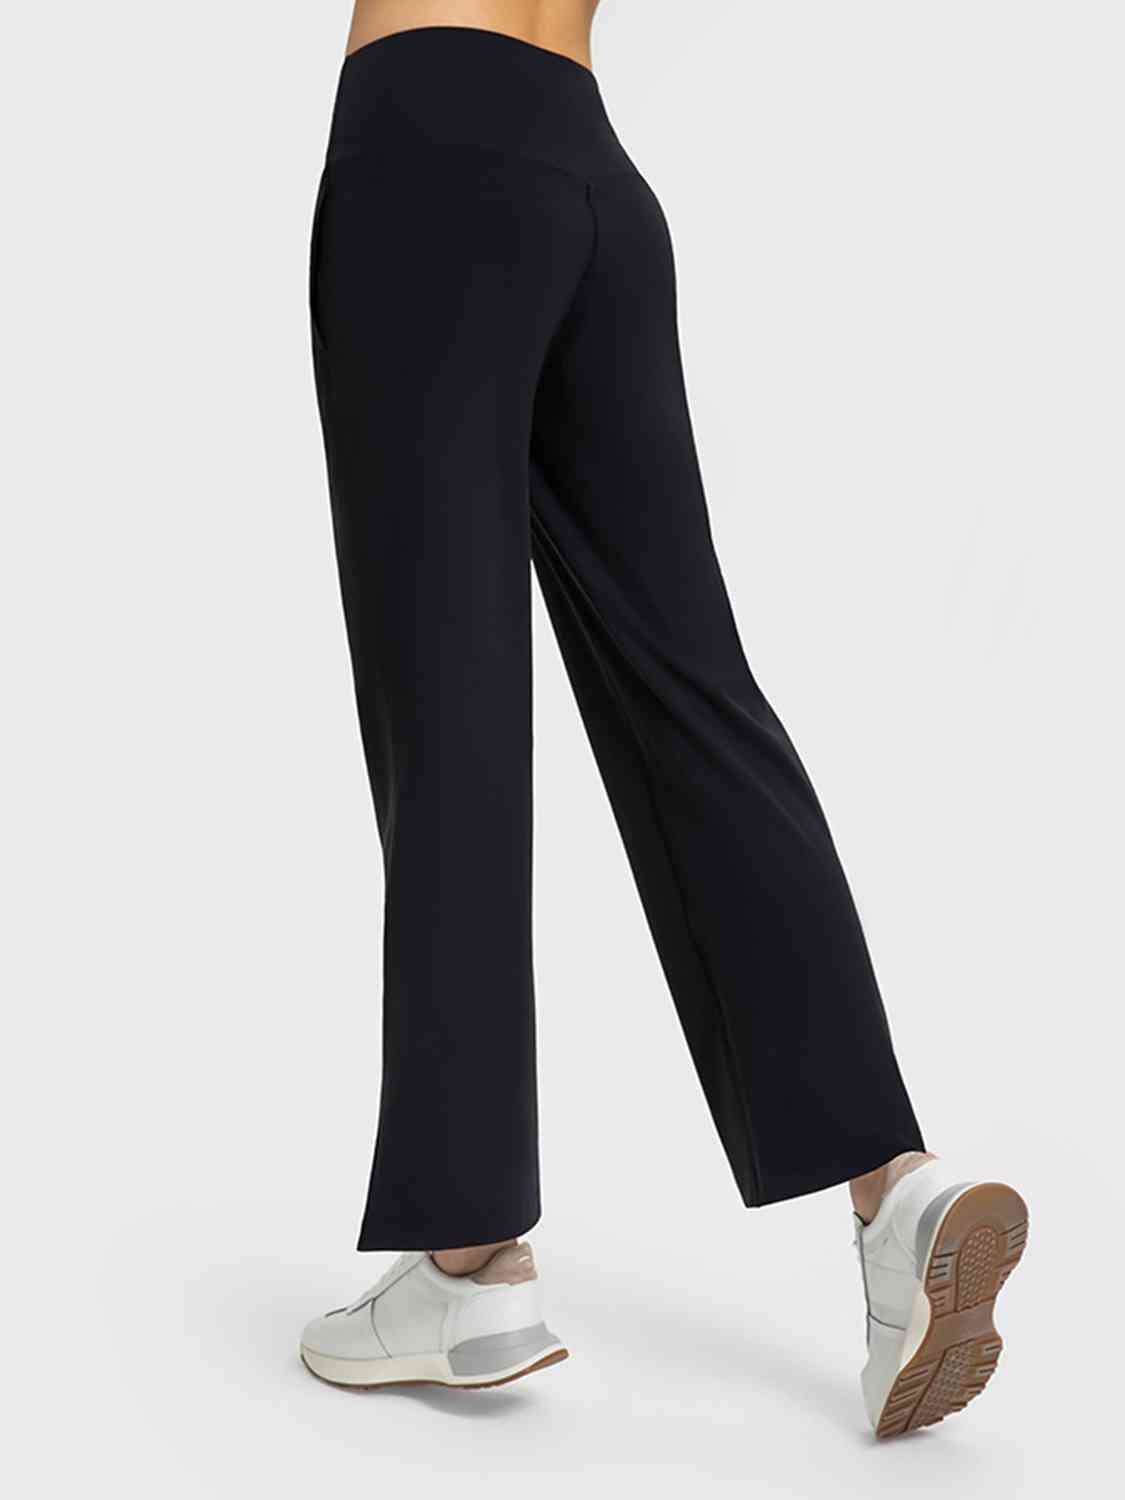 Wide Leg Slit Sport Pants with Pockets